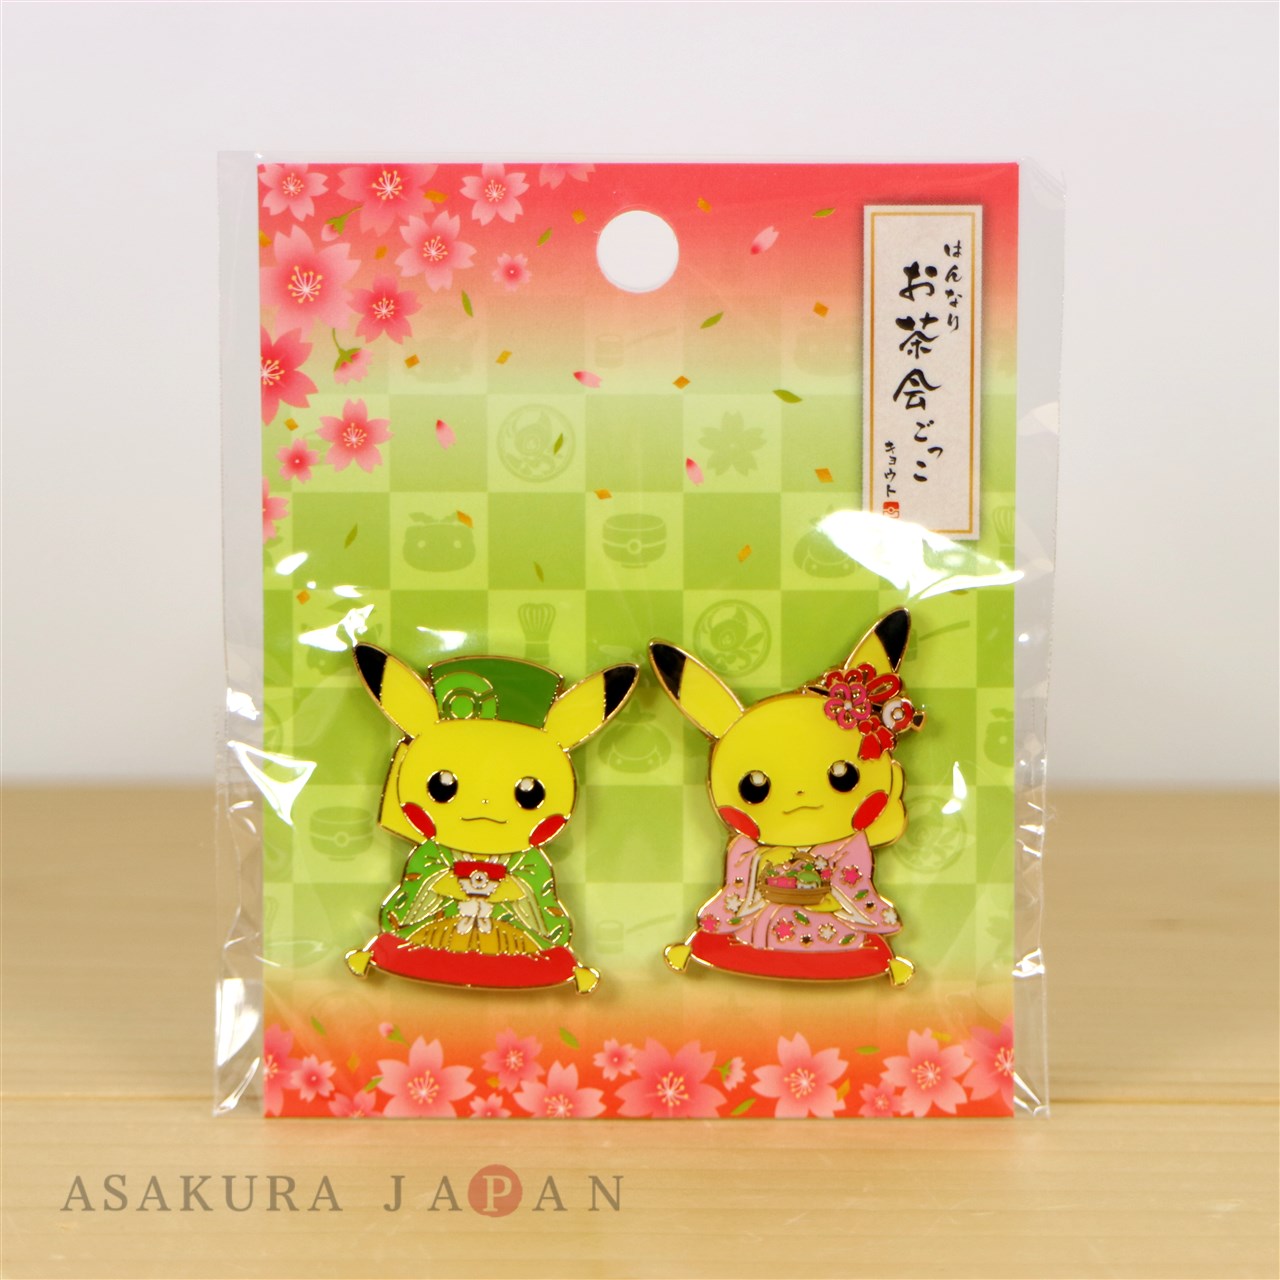 Pokemon Center Kyoto 19 Renewal Open Japanese Tea Party Pikachu Pin Badge Pins Male Female